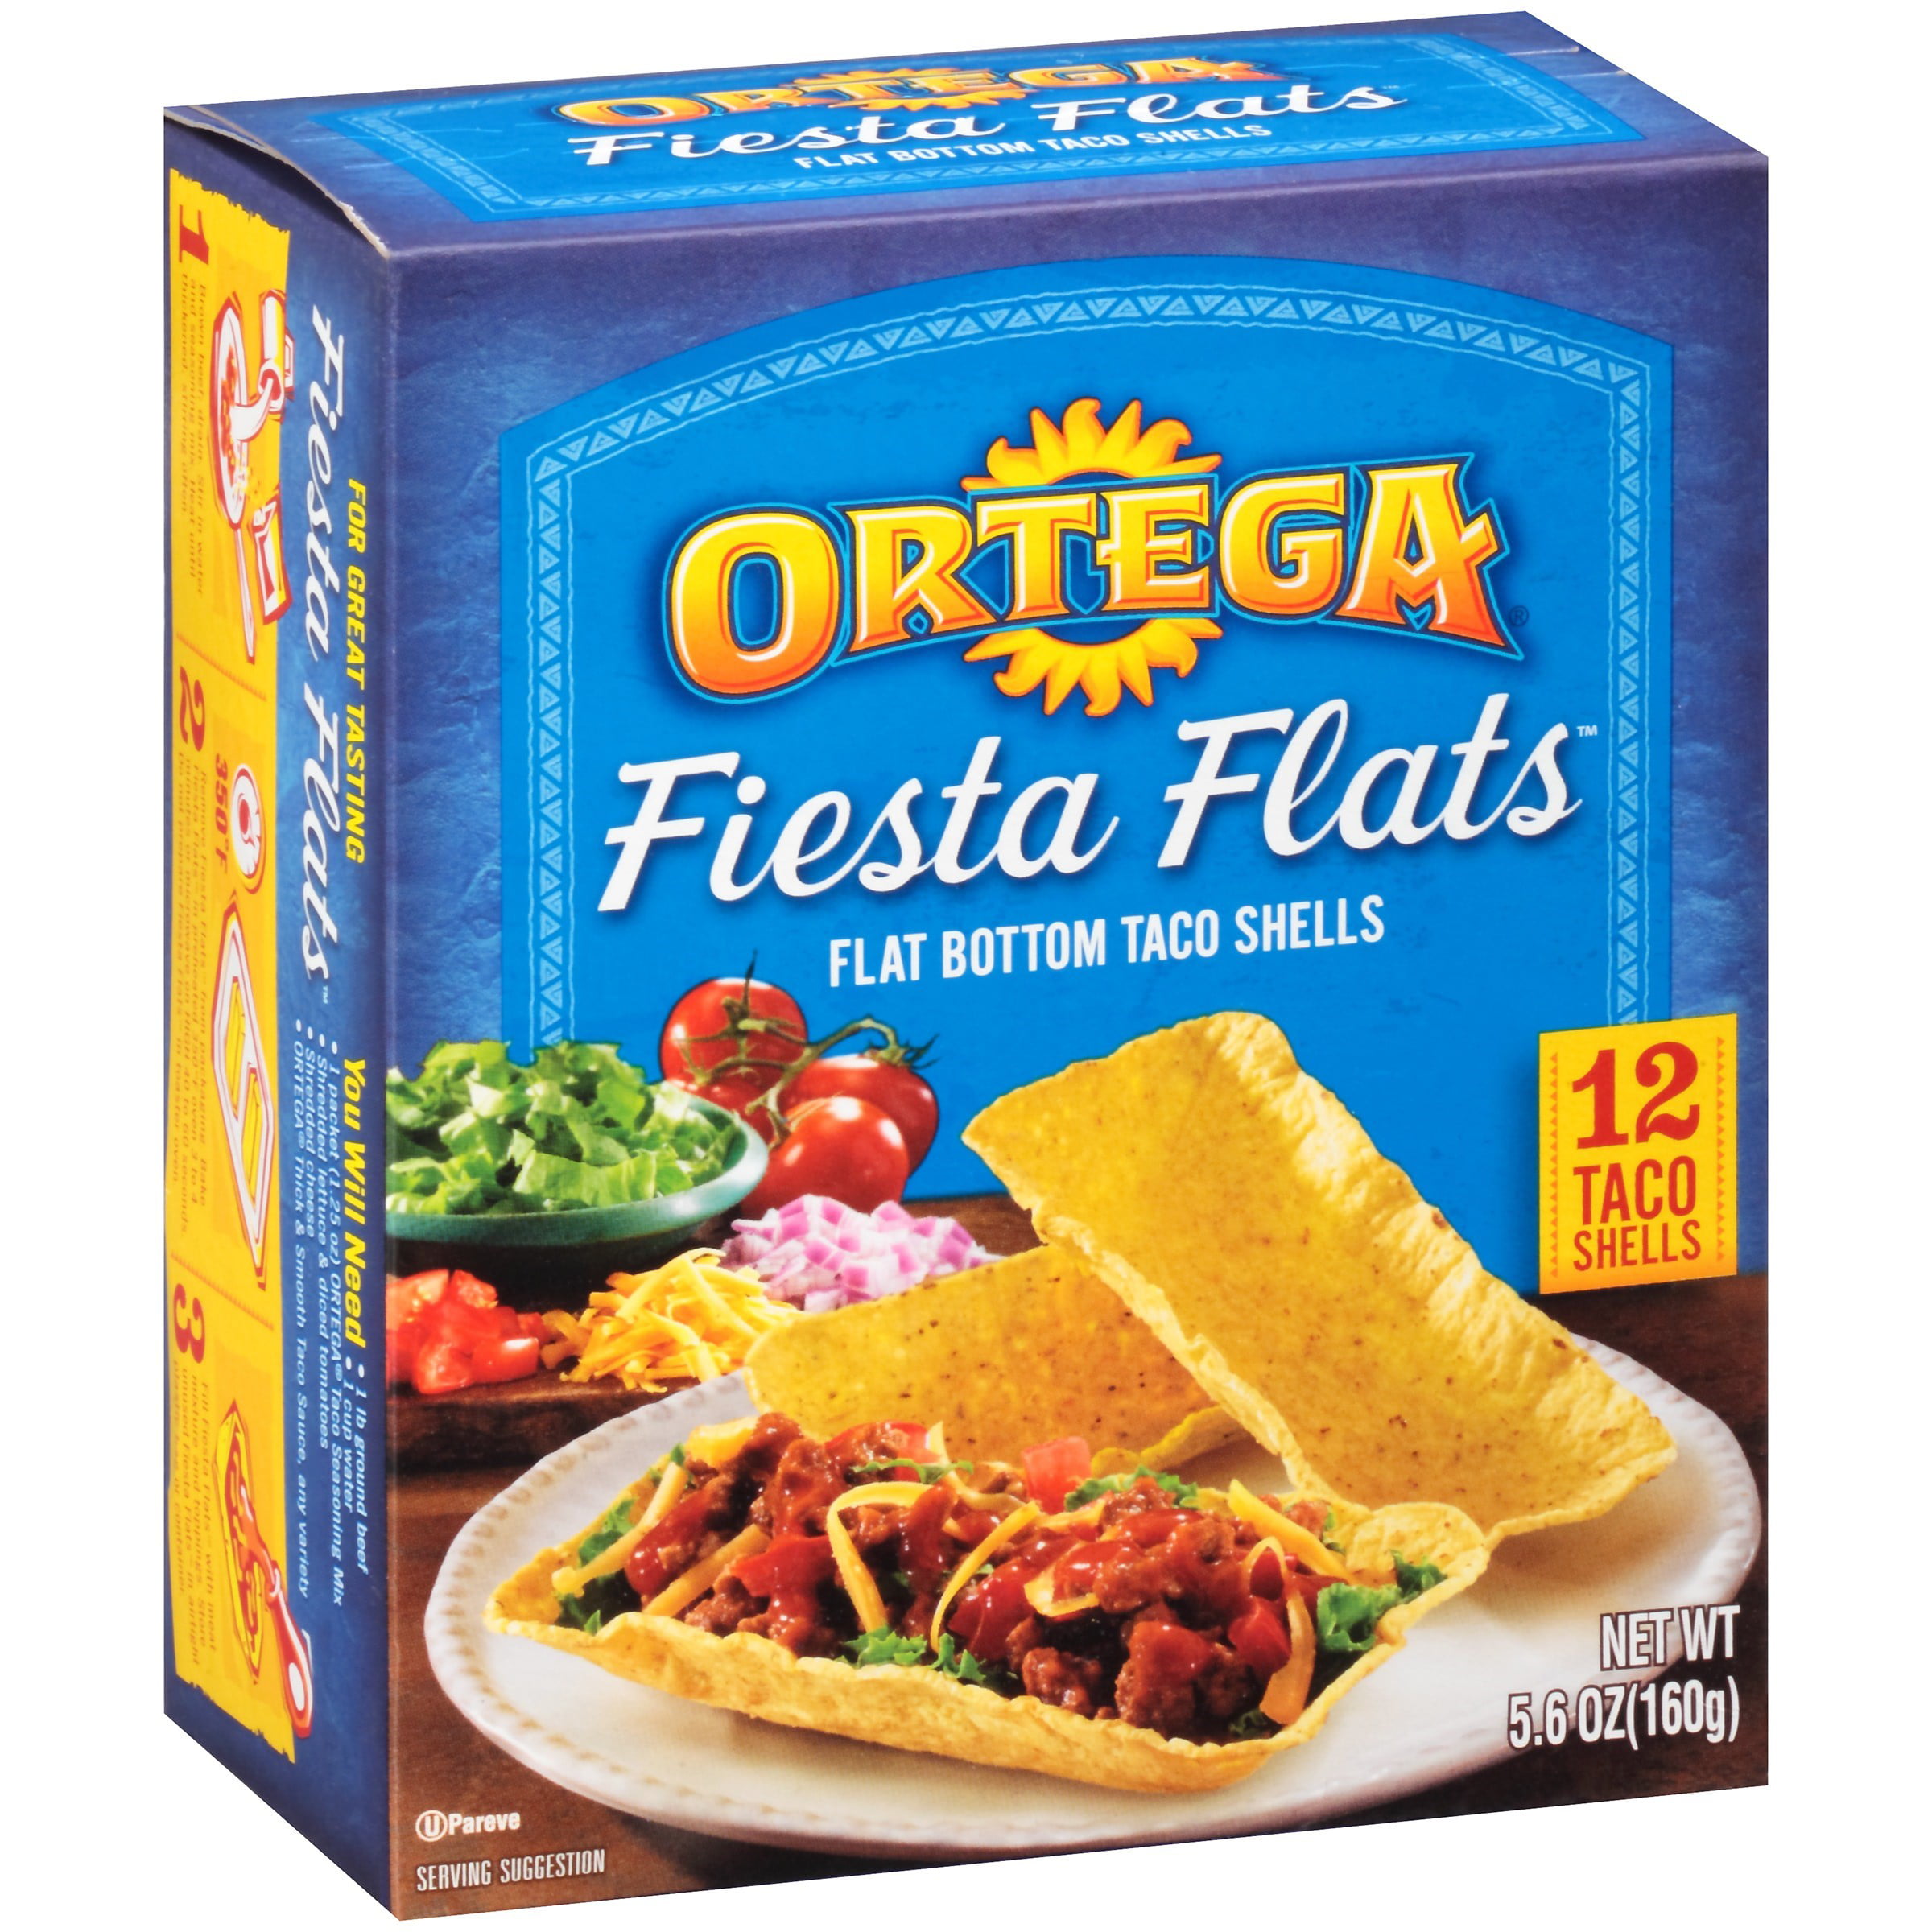 Ortega Fiesta Flats Flat Bottom Taco Shells 5.6 oz Box - Walmart.com.